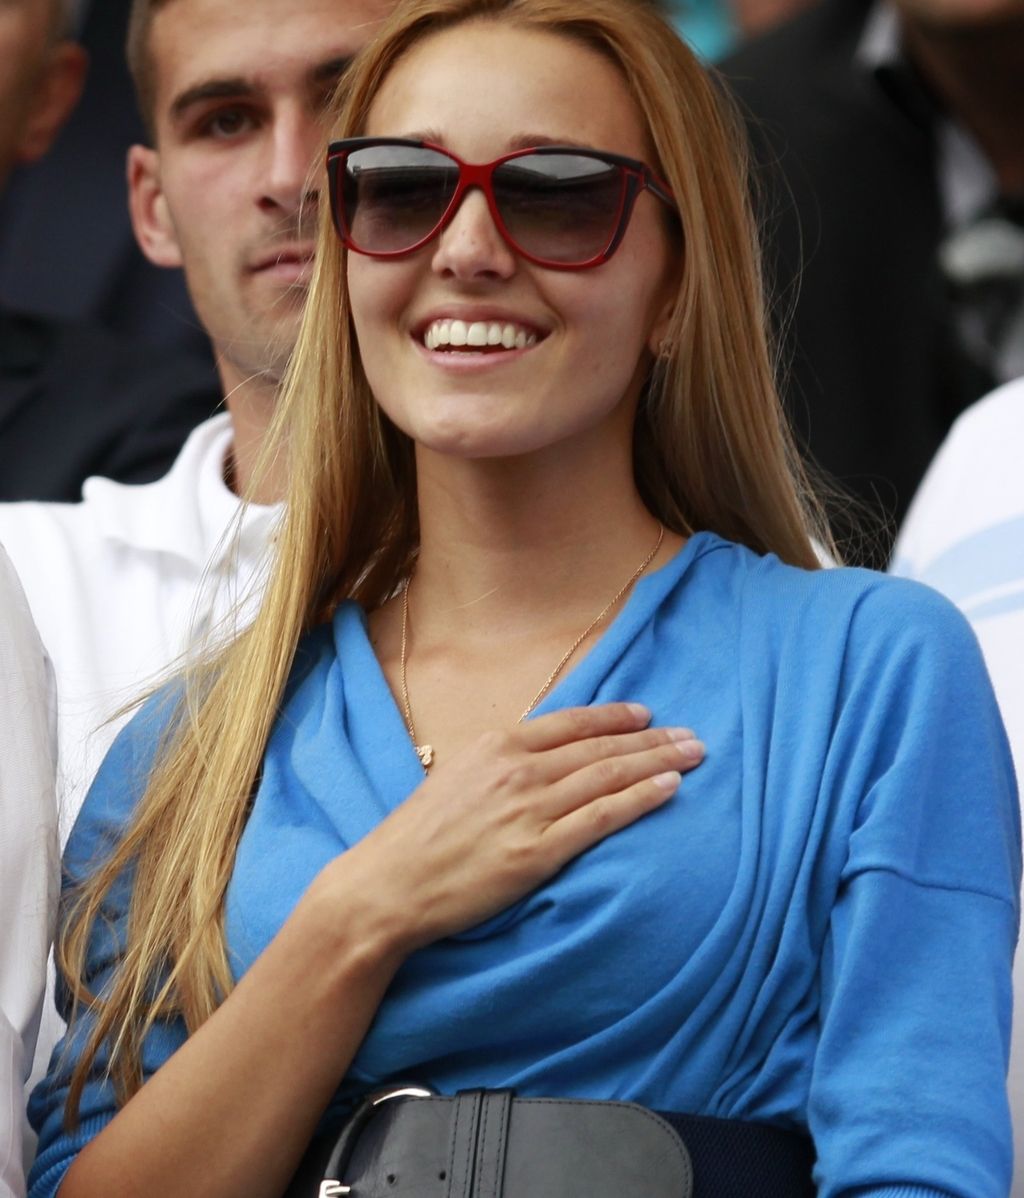 Jelena Ristic arrebata el protagonismo a su novio Djokovic en el US Open 2011